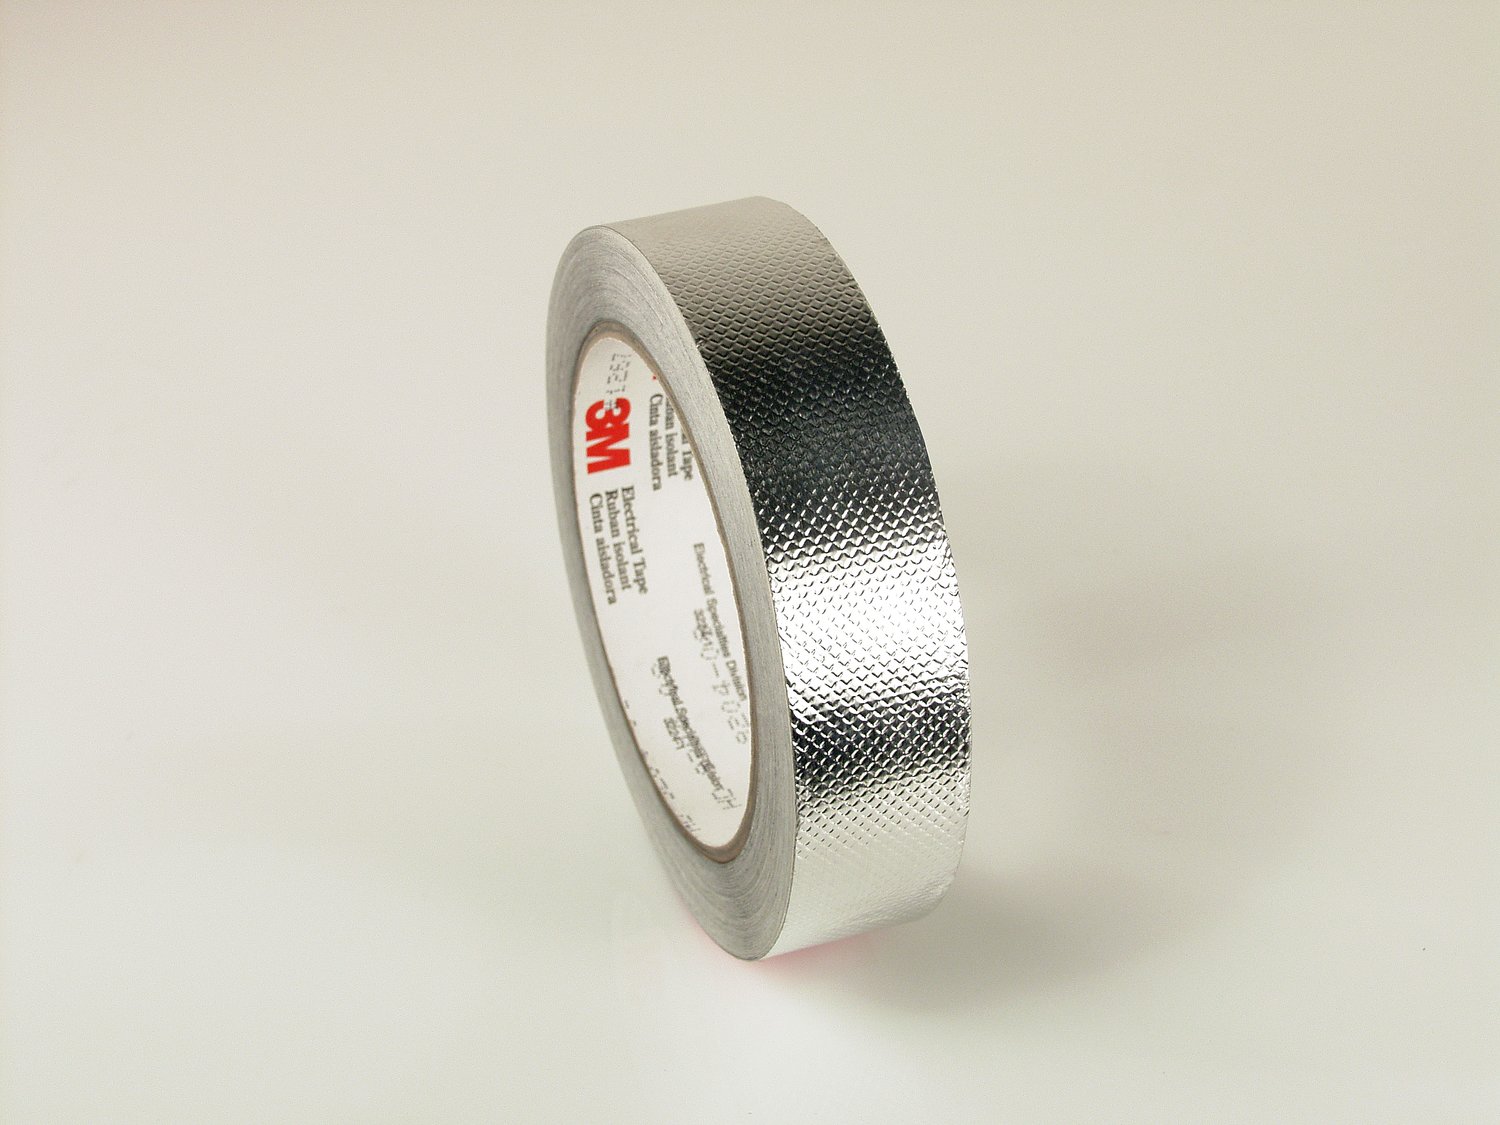 7010305700 - 3M Embossed Aluminum Foil EMI Shielding Tape 1267, 7.7 in x 10 in,
Sheet, 10 Sheets/Bag